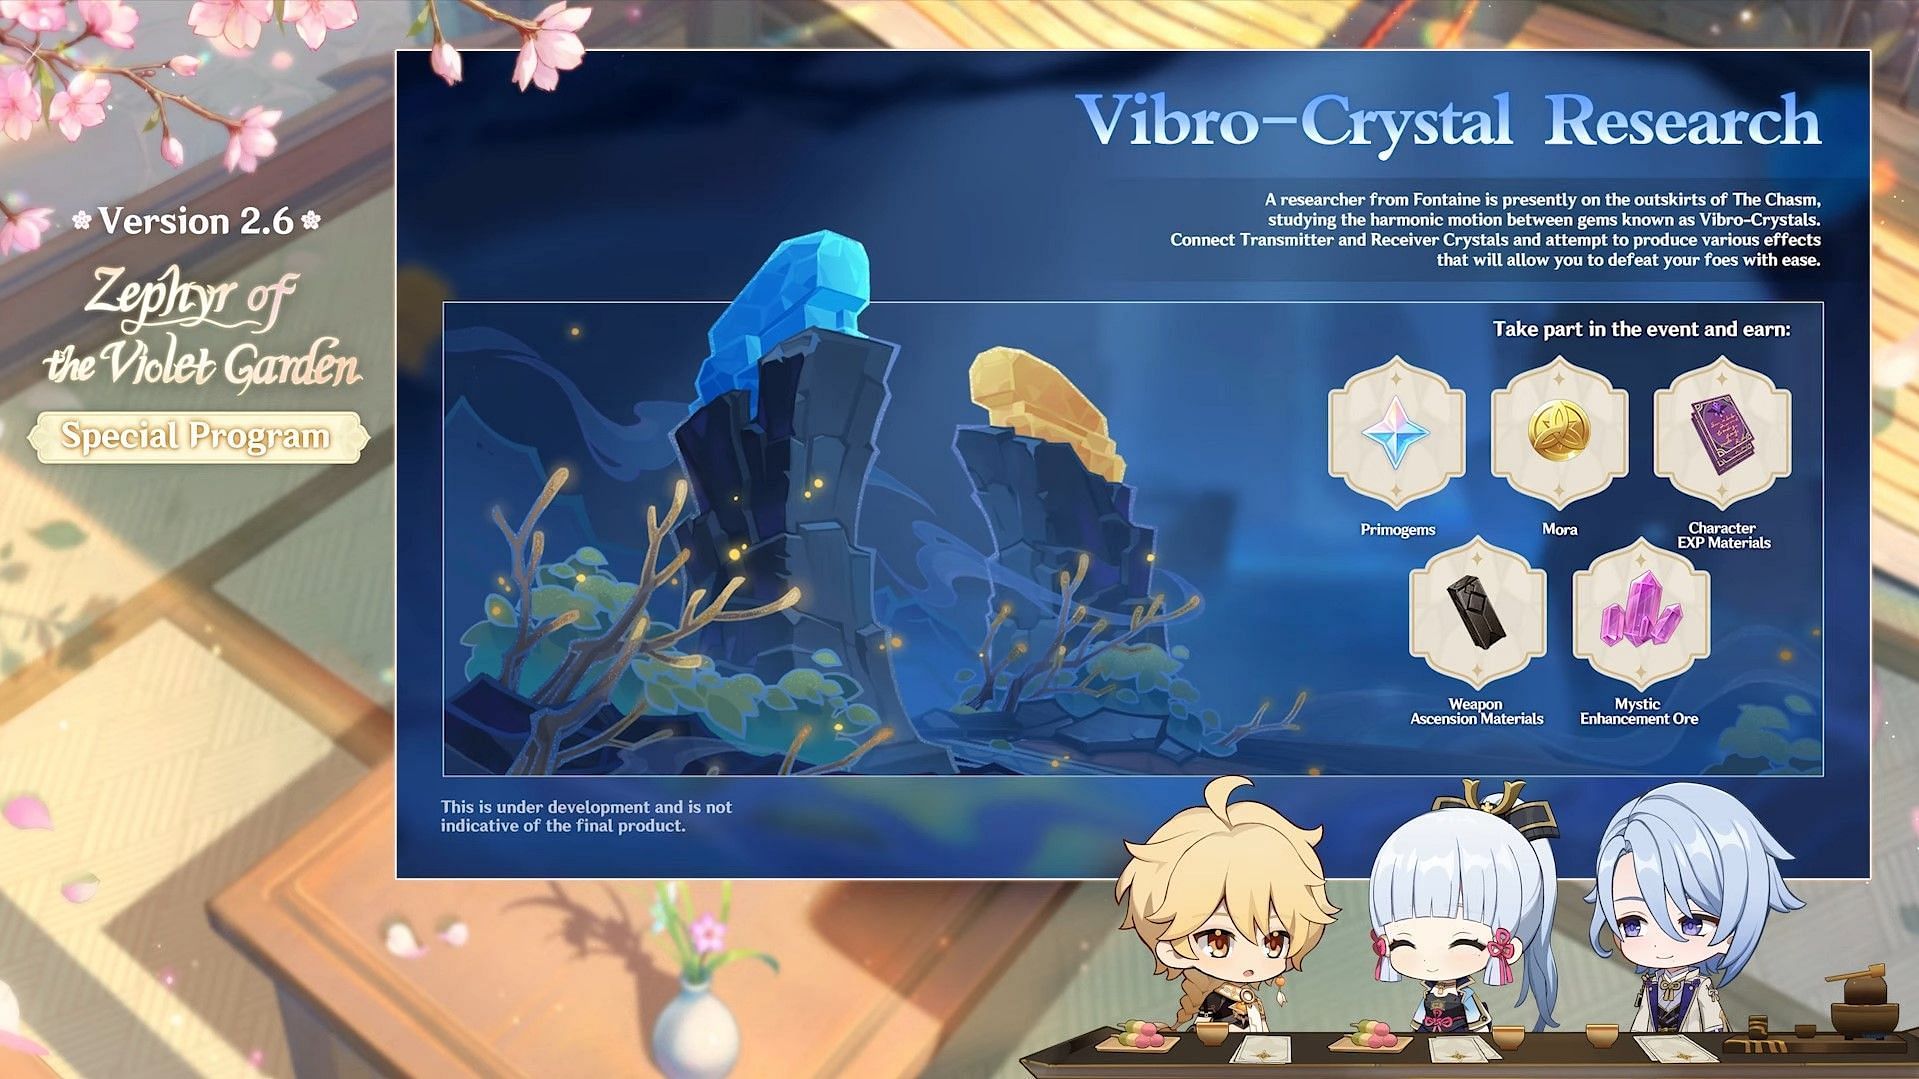 Vibro-Crystal Research (Image via miHoYo)